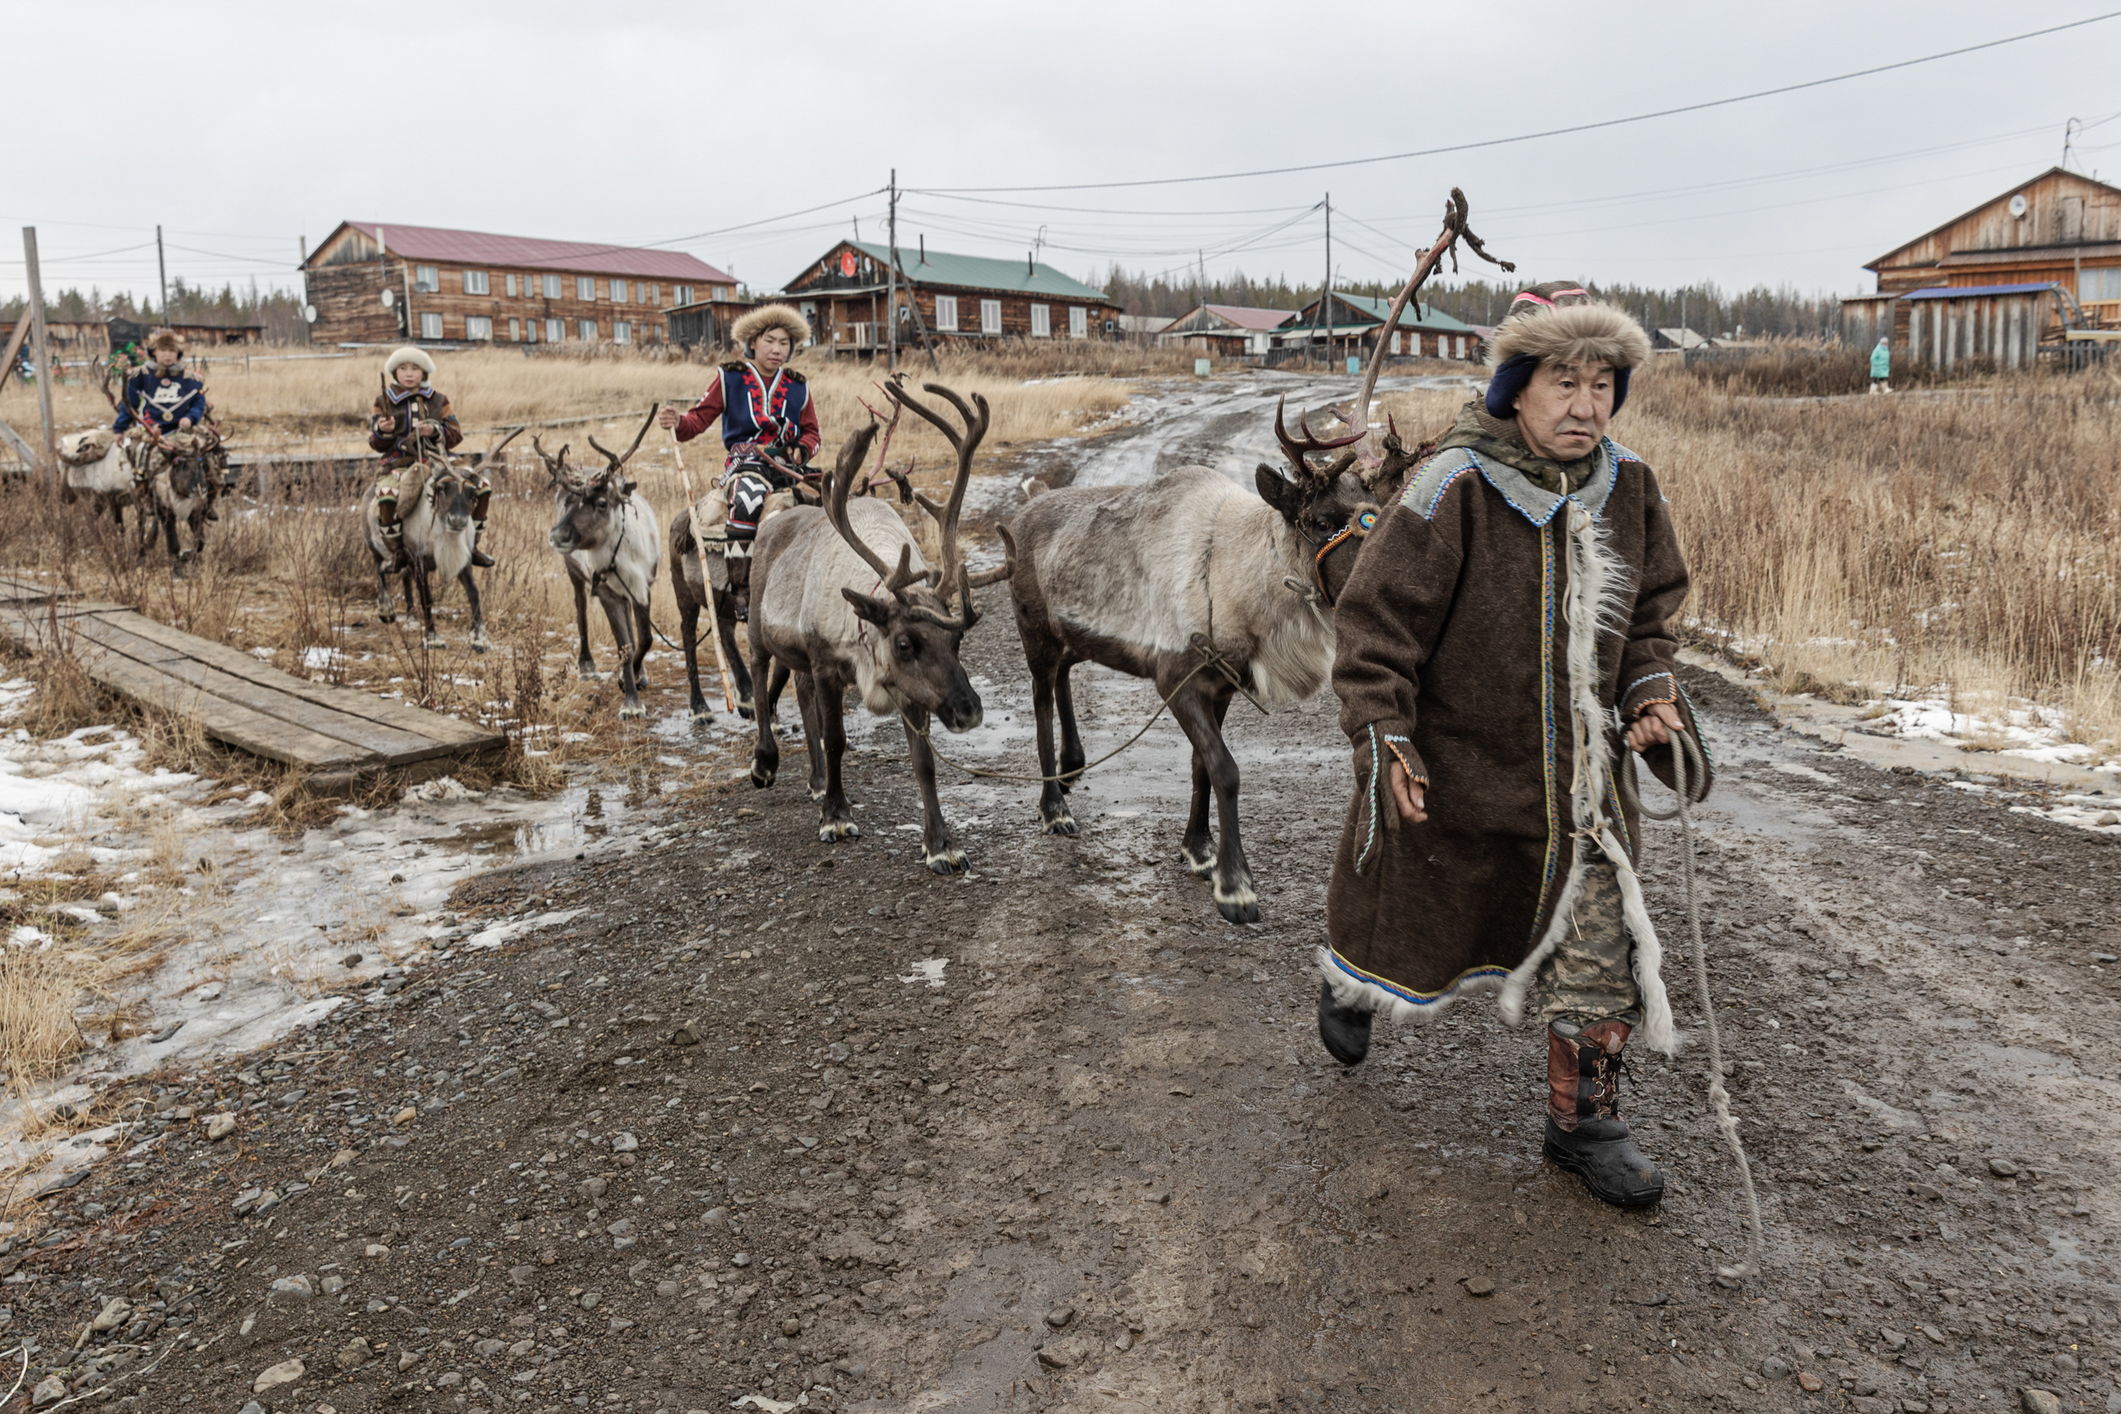 Суринда – поселок оленеводов недалеко от географического центра России